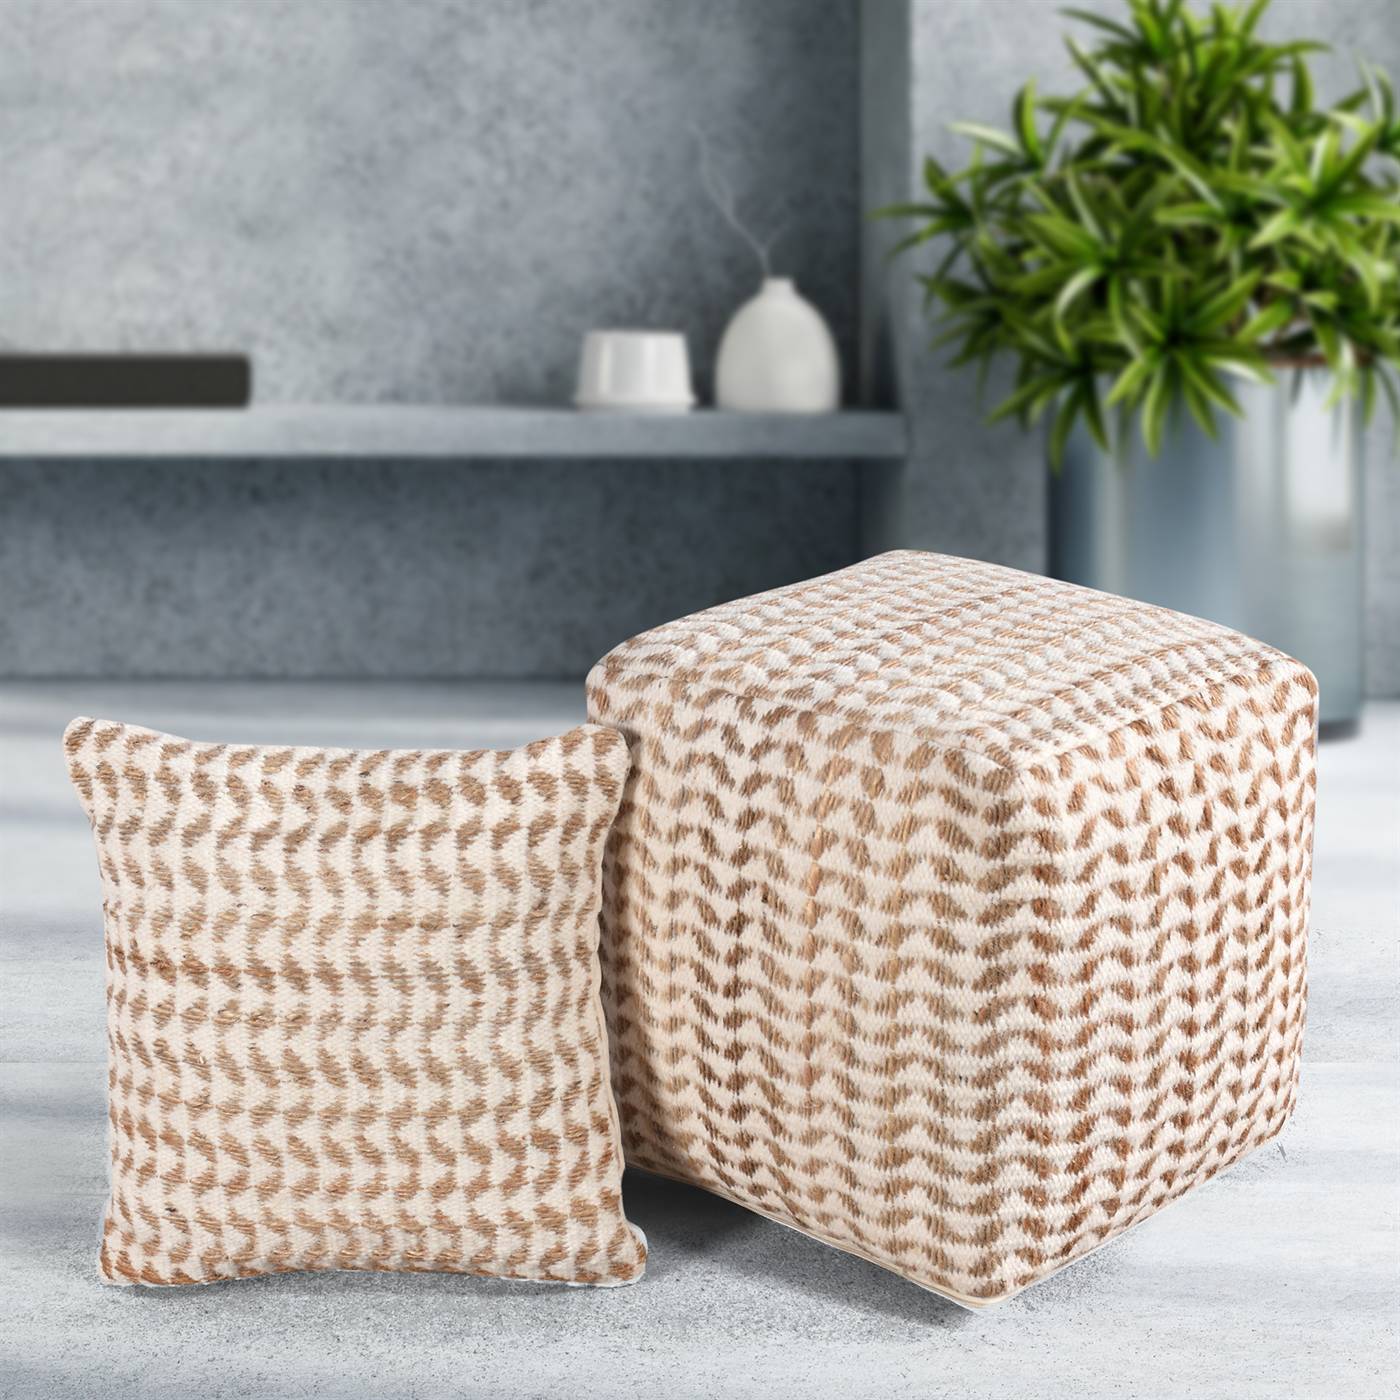 Basento Cushion, 45x45 cm, Natural, Natural White, Jute, Wool, Hand Woven, Pitloom, Flat Weave